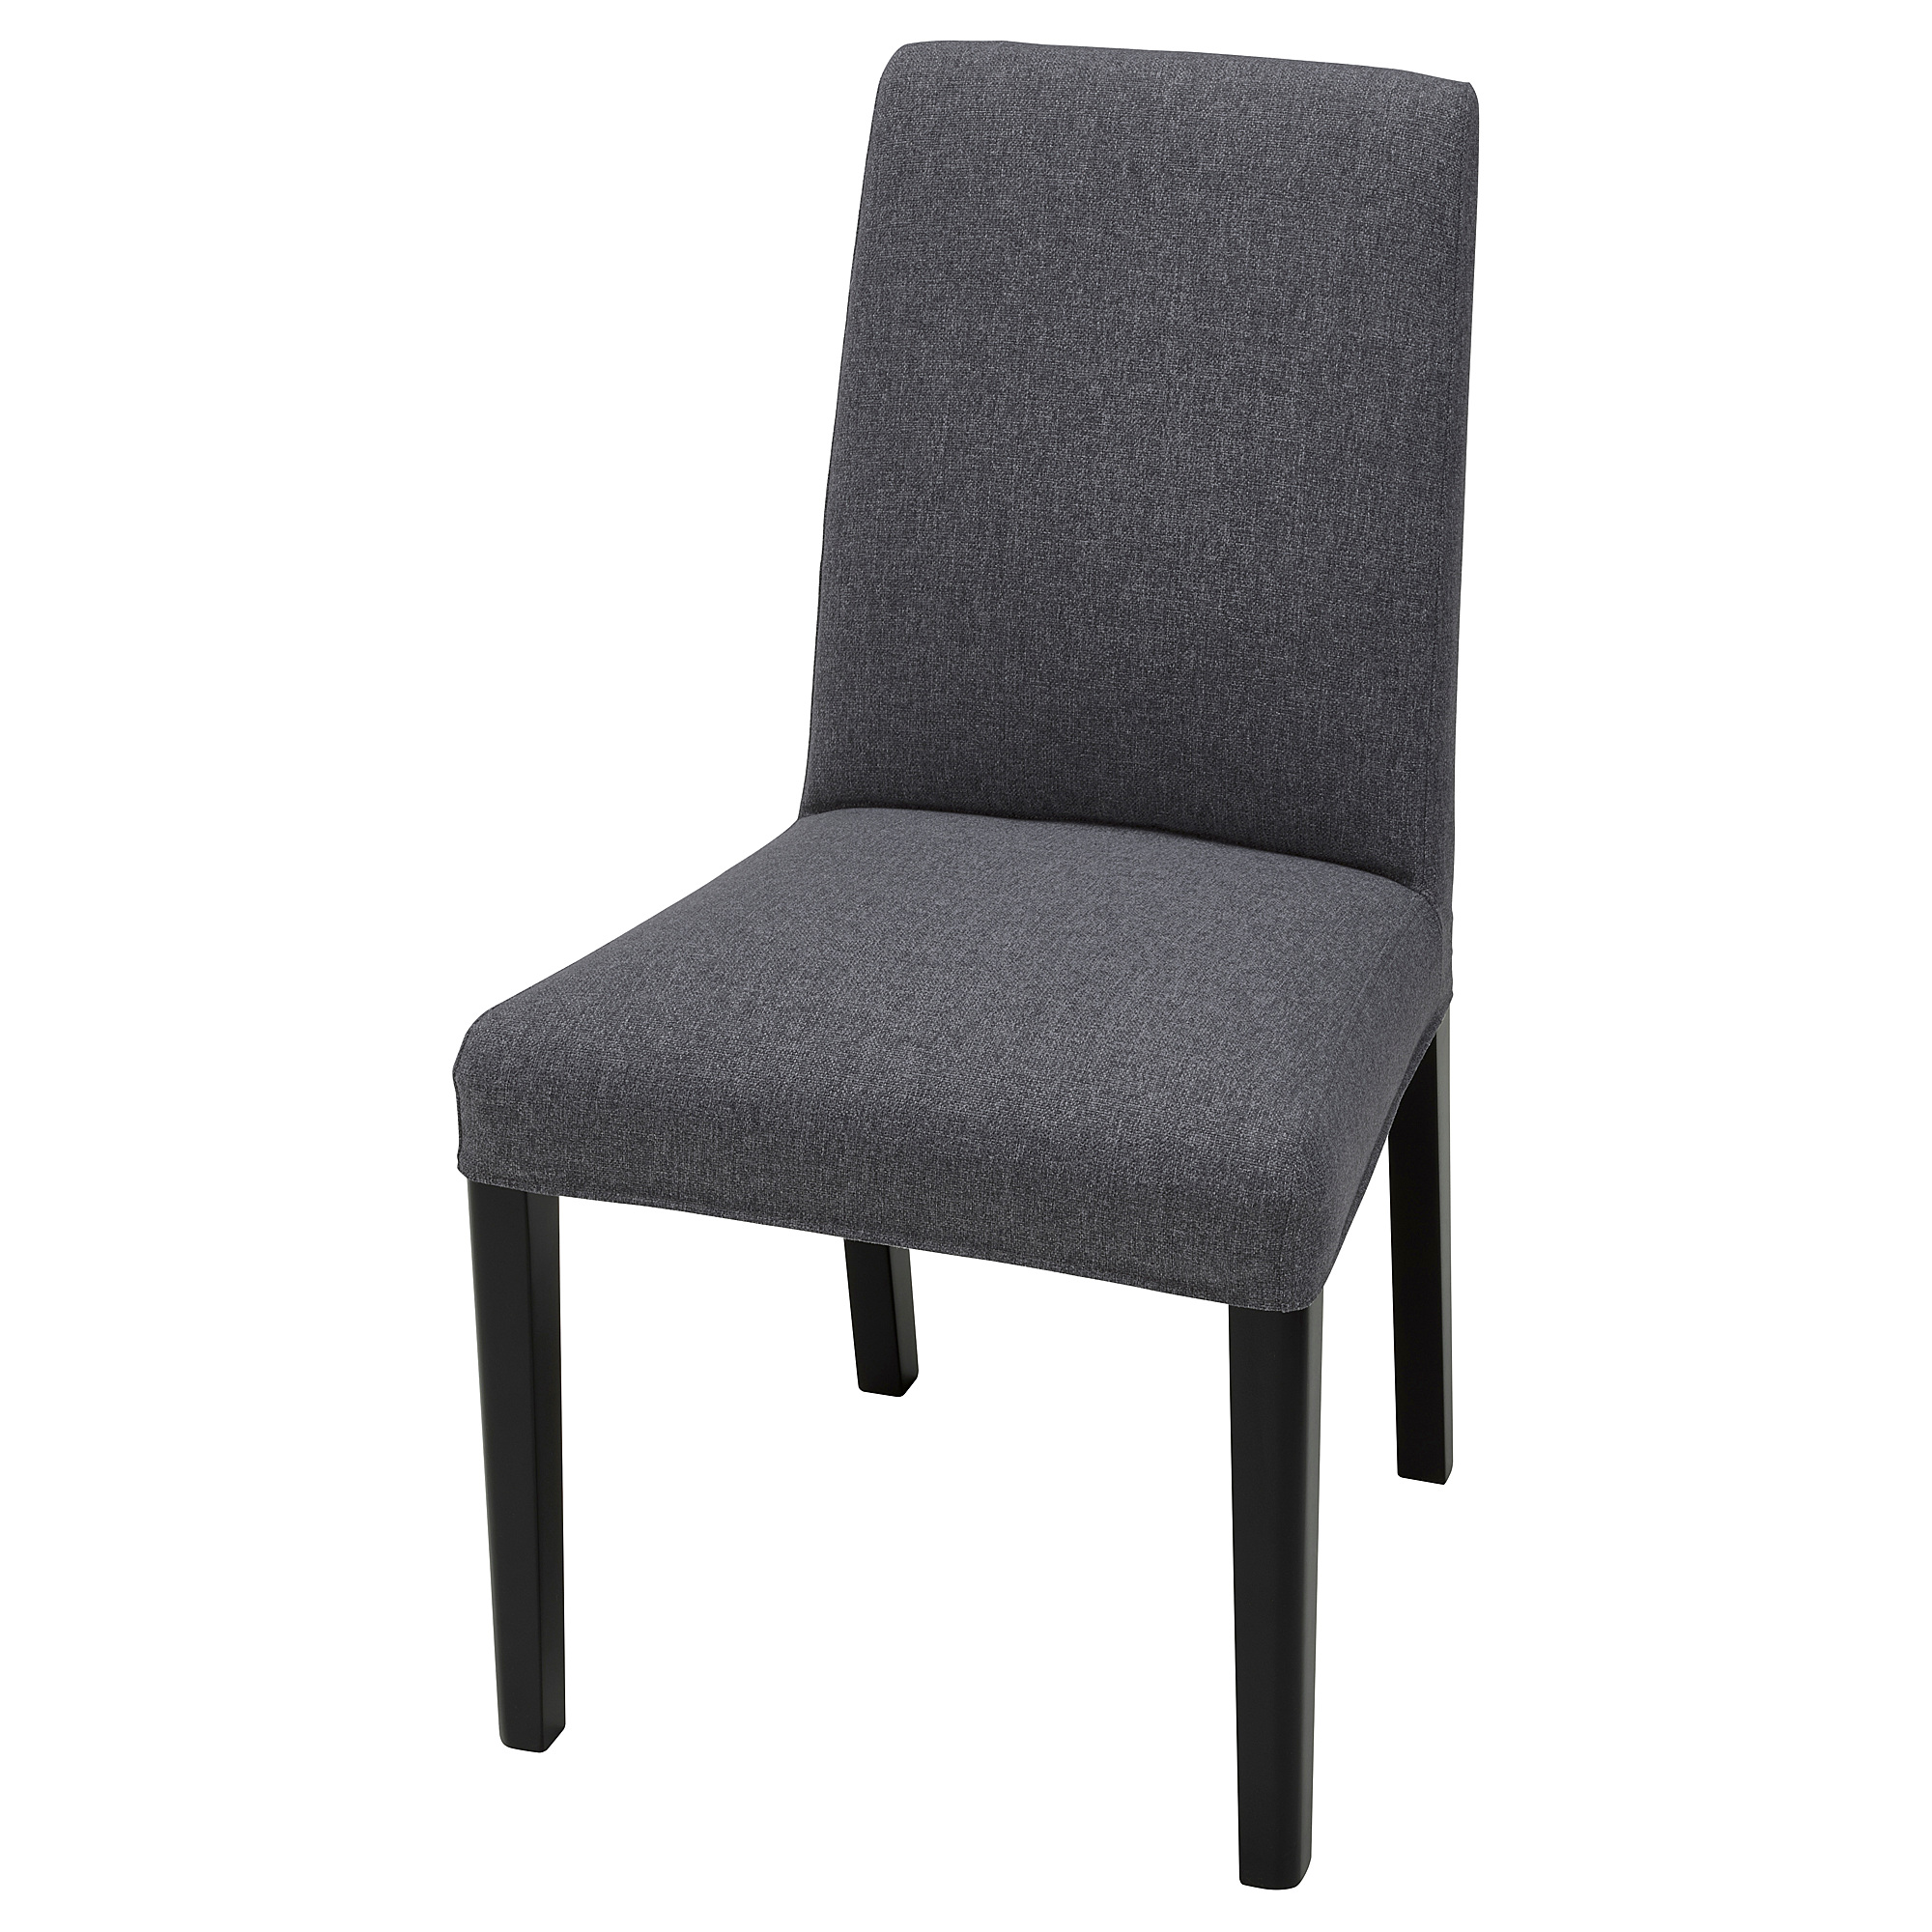 BERGMUND chair cover